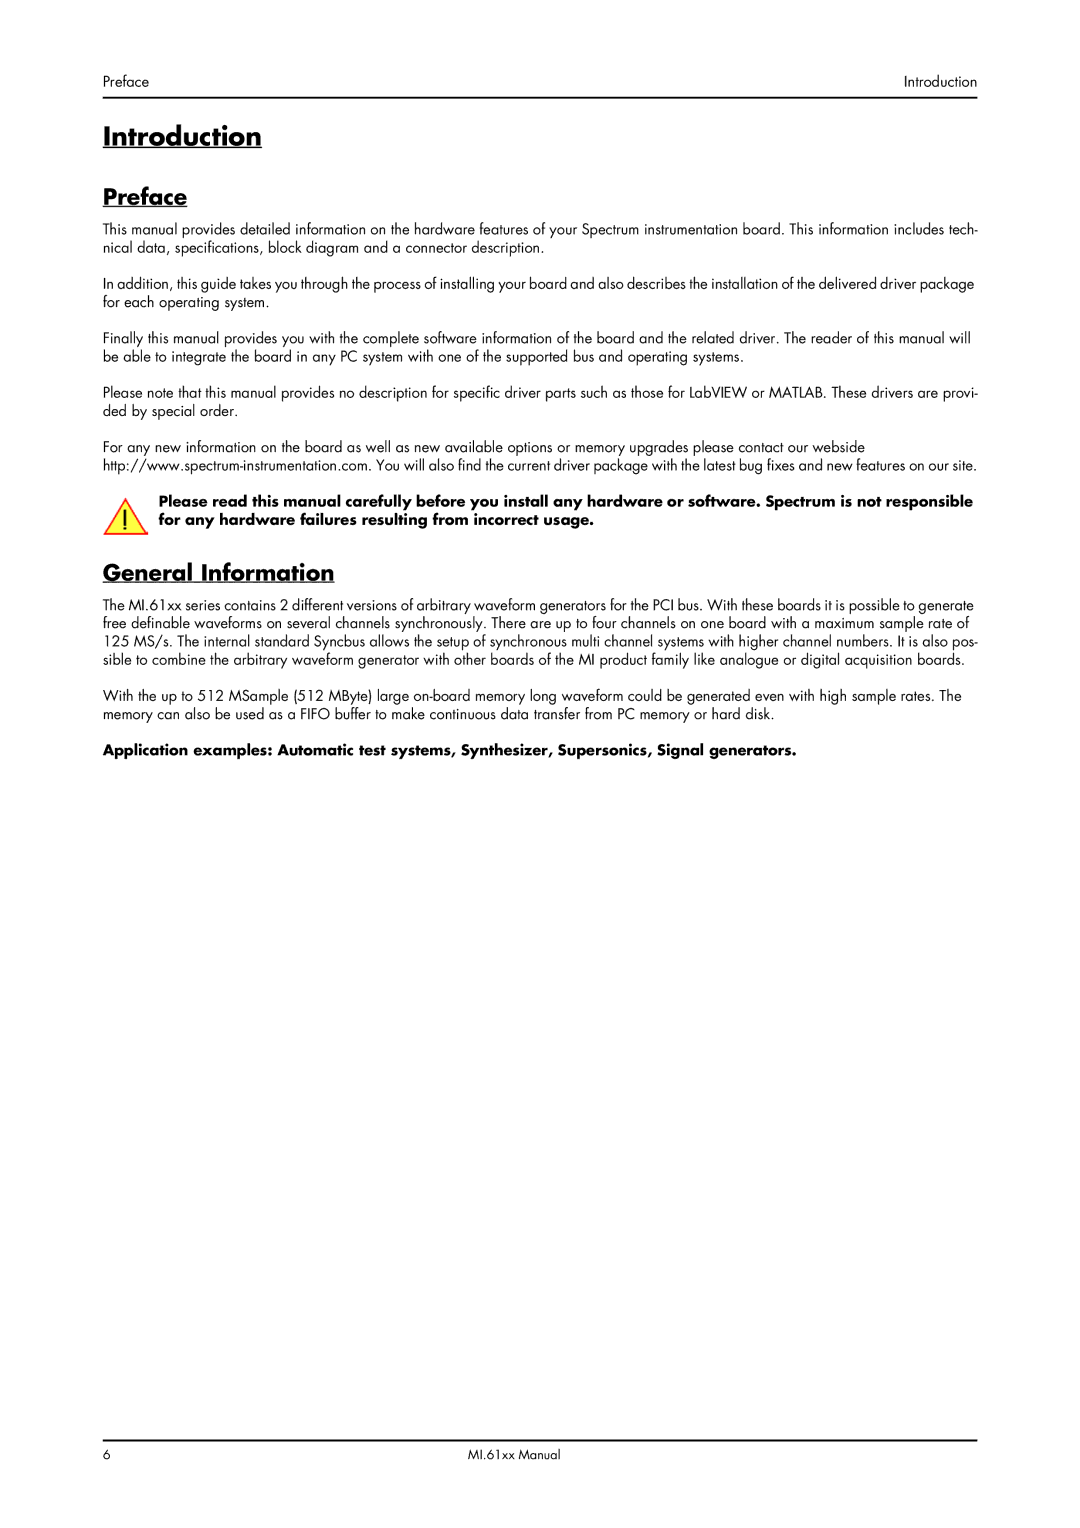 Spectrum Brands MI.61XX manual Introduction, Preface, General Information 